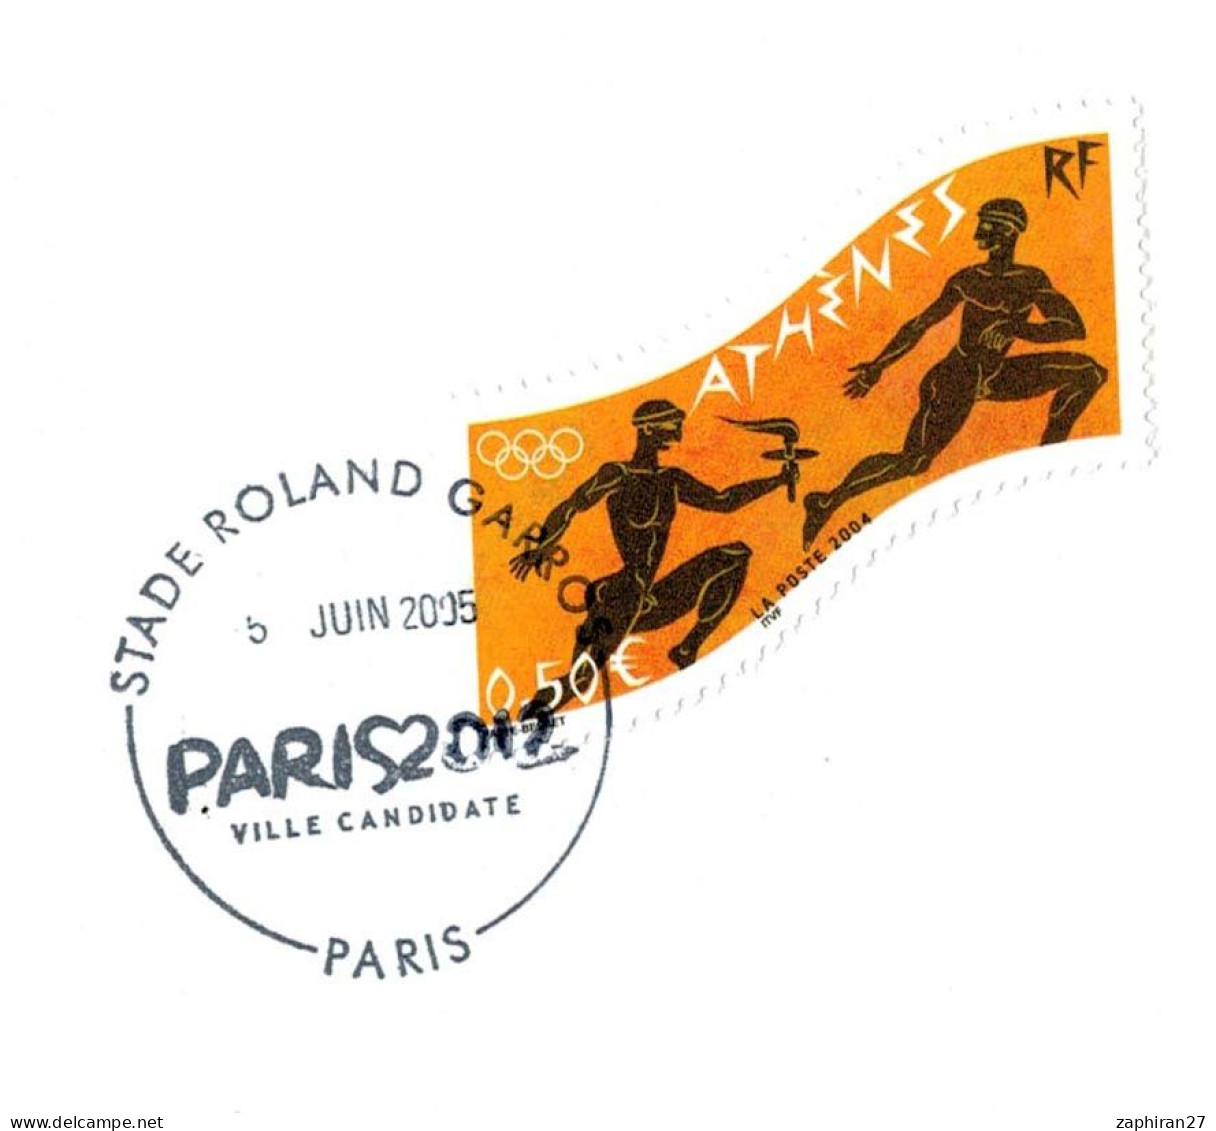 JEUX OLYMPIQUES PARIS 2012 STADE ROLAND GARROS VILLE CANDIDATE (5-6-2005) #462# - Sommer 2012: London